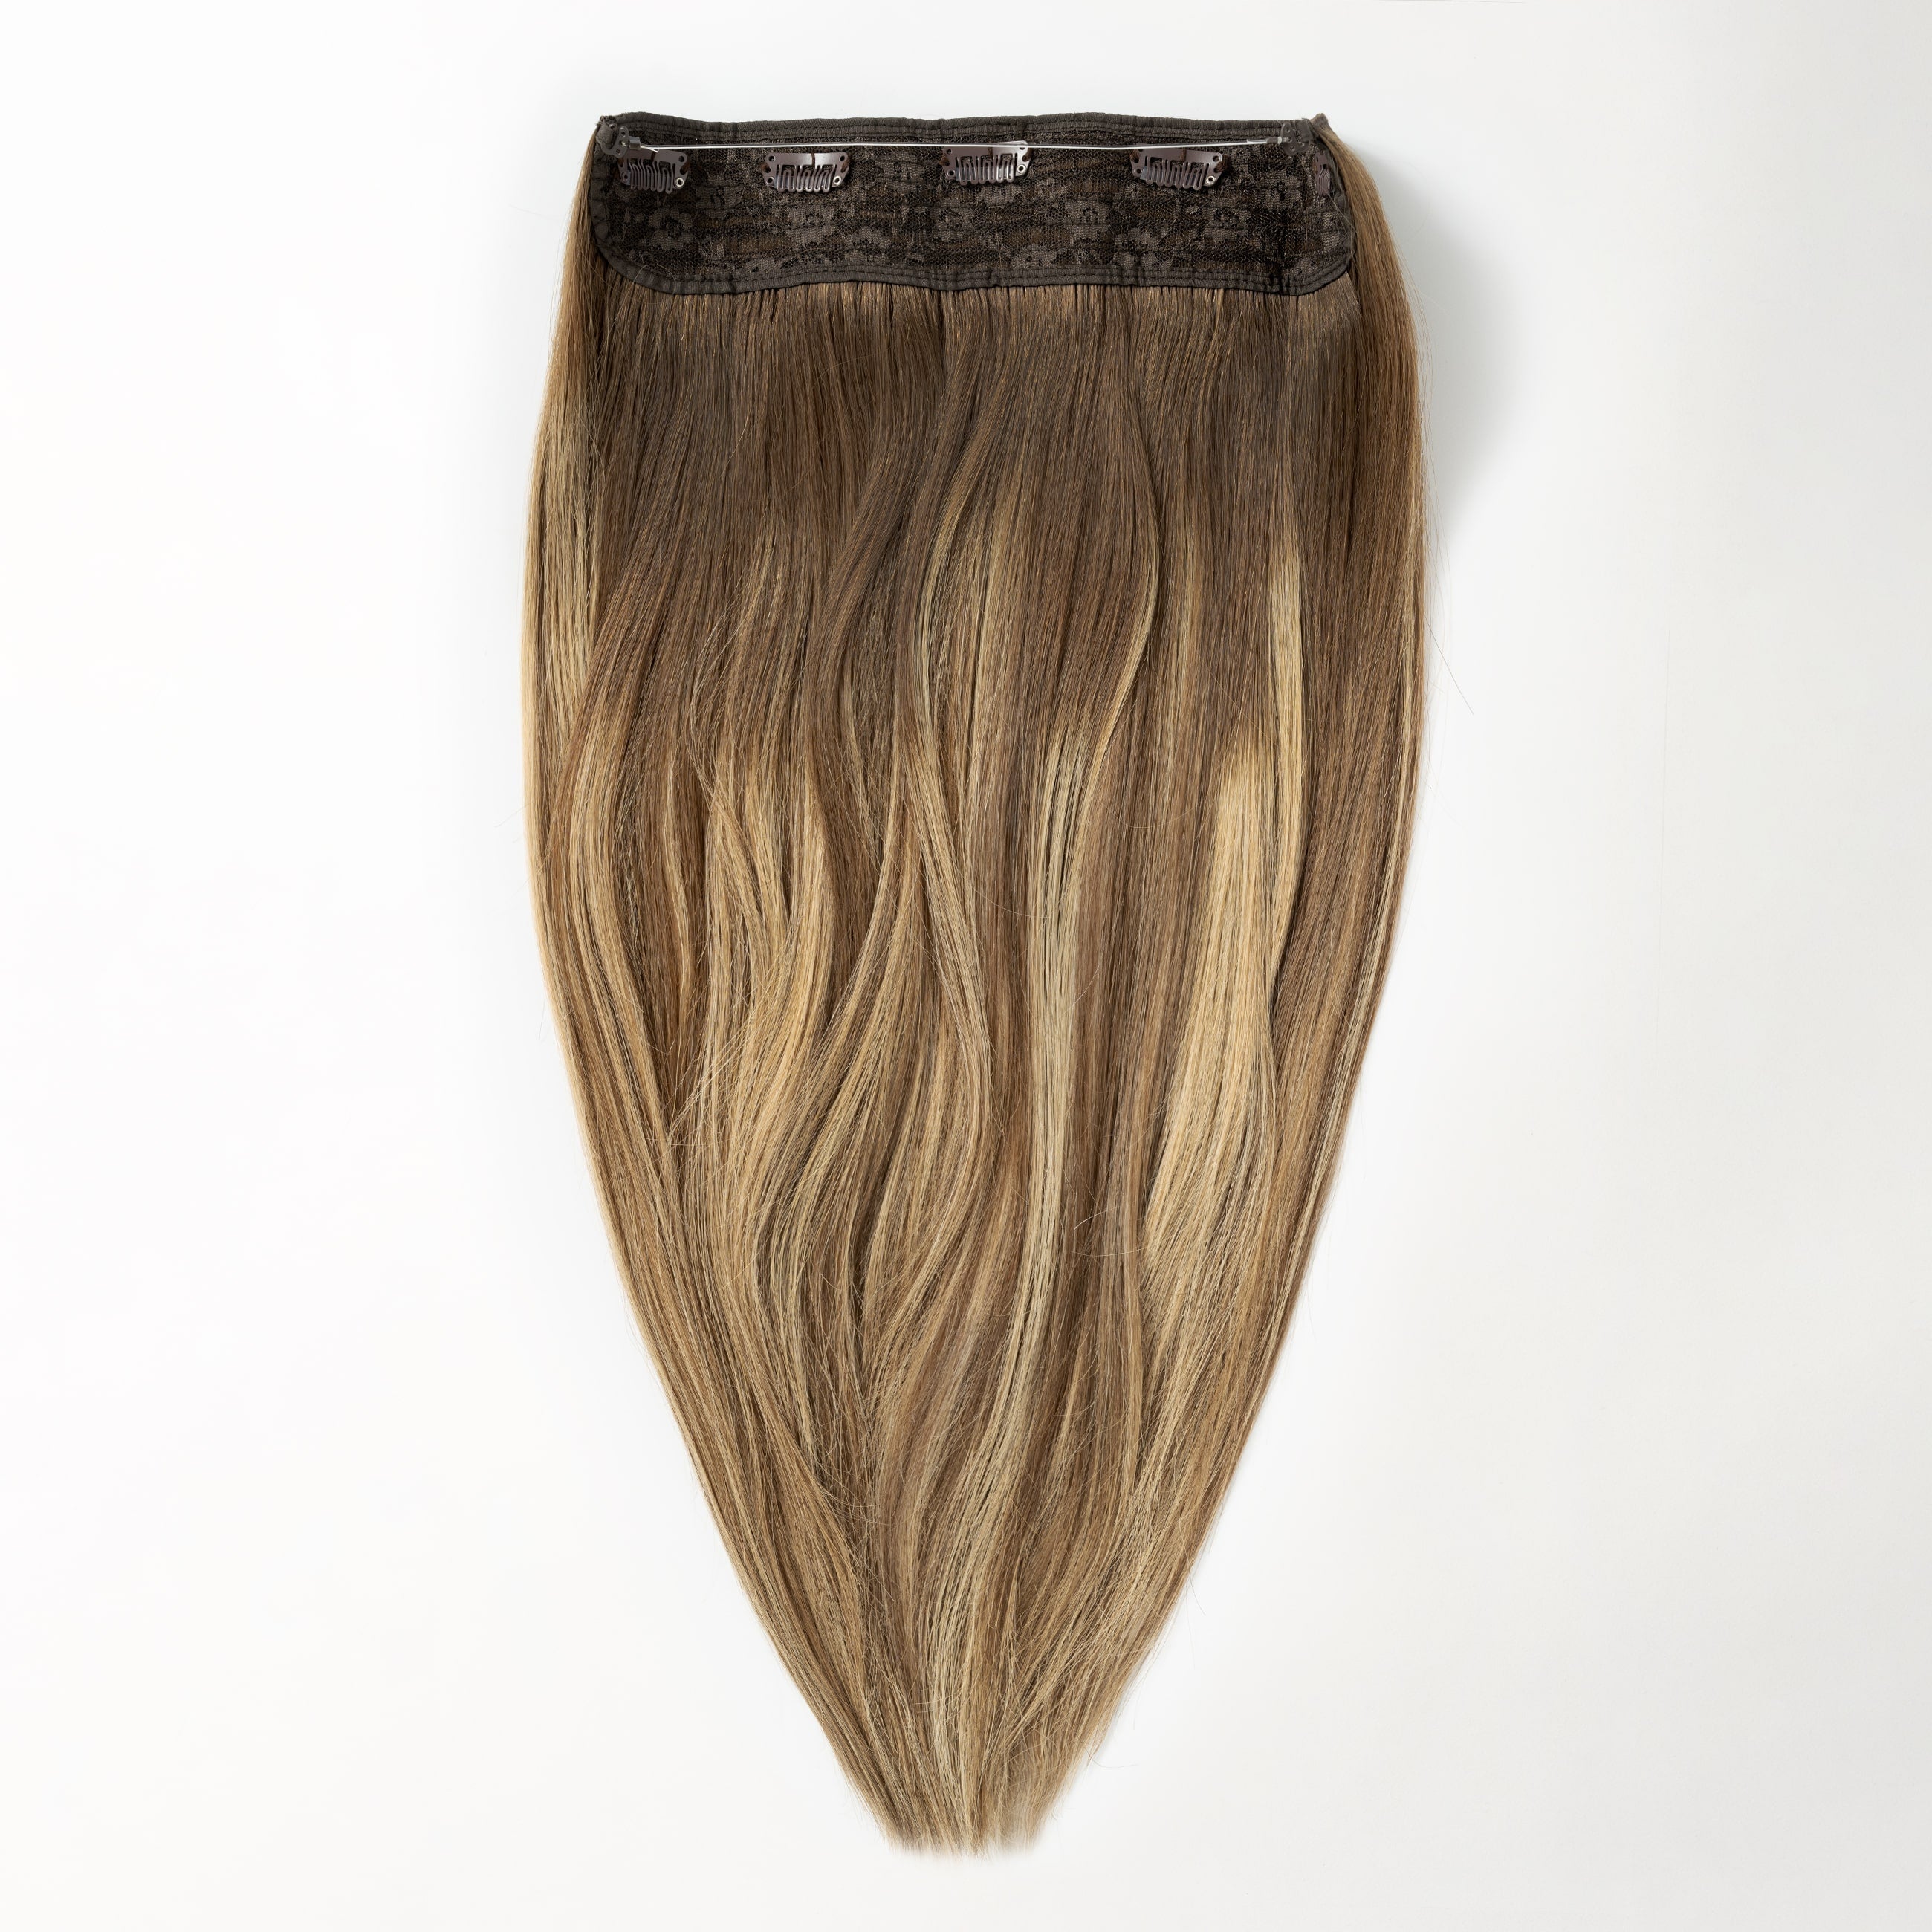 Halo hair extensions - Natural Blonde Balayage 3B+15A